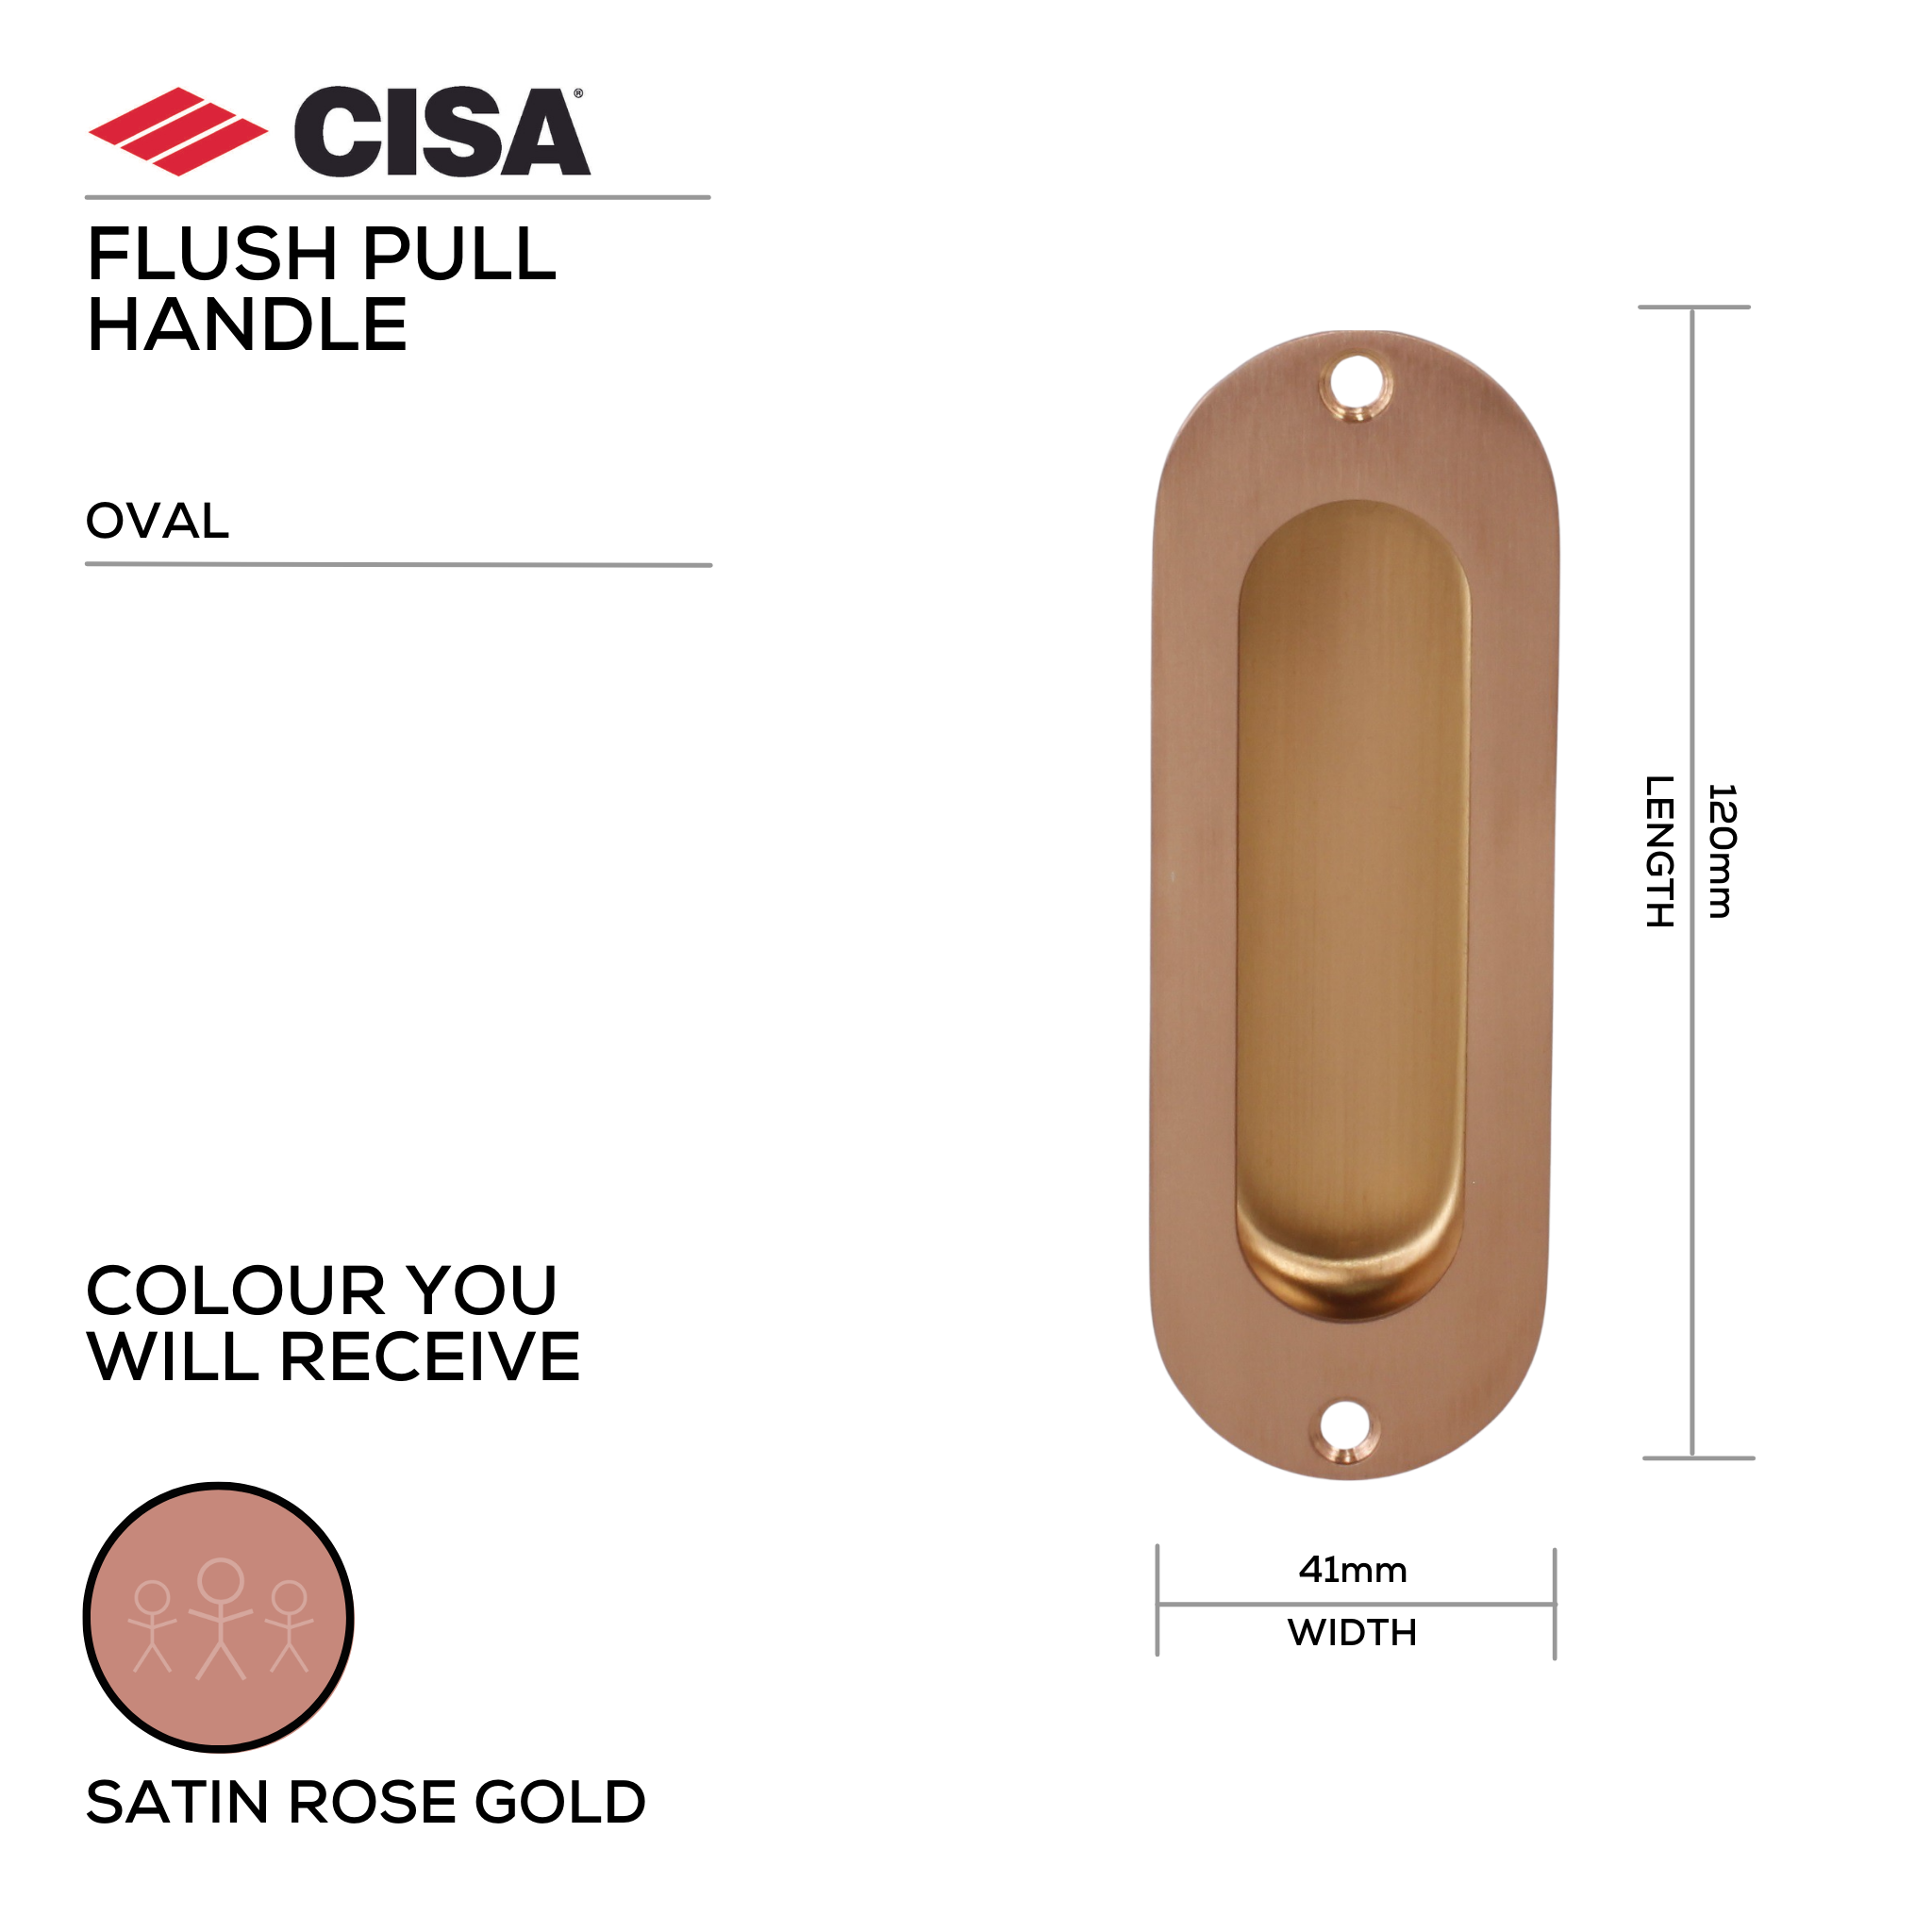 FP02.SRG, Flush Pull, Oval, 120mm (l) x 41mm (w), Satin Rose Gold, CISA